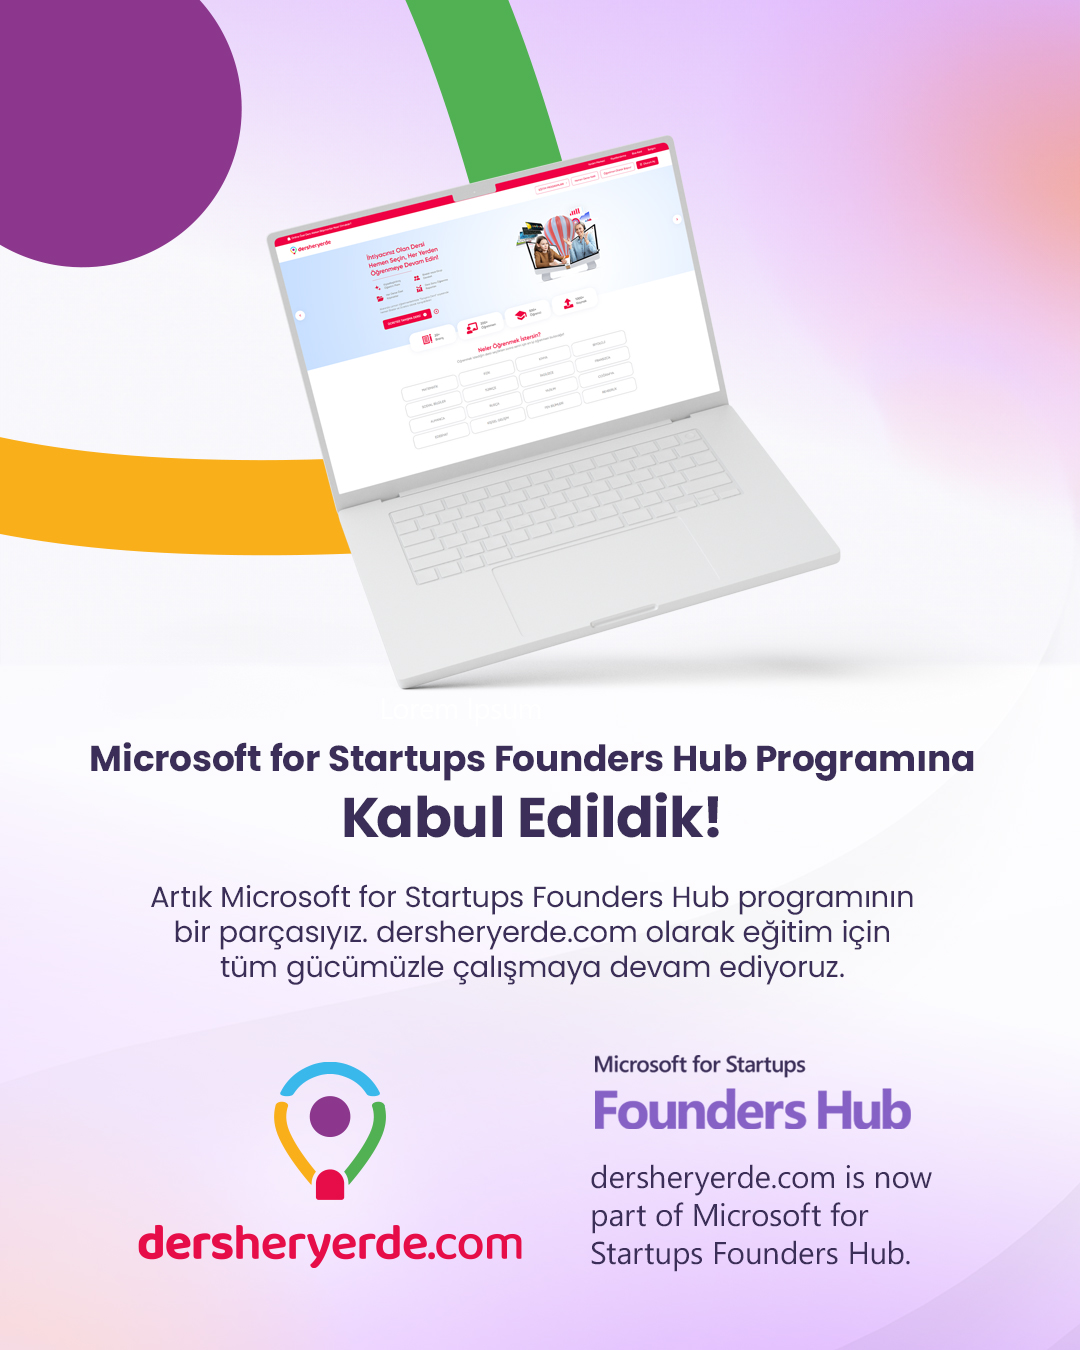 Microsoft for Startups Founders Hub Programına Kabul Edildik!